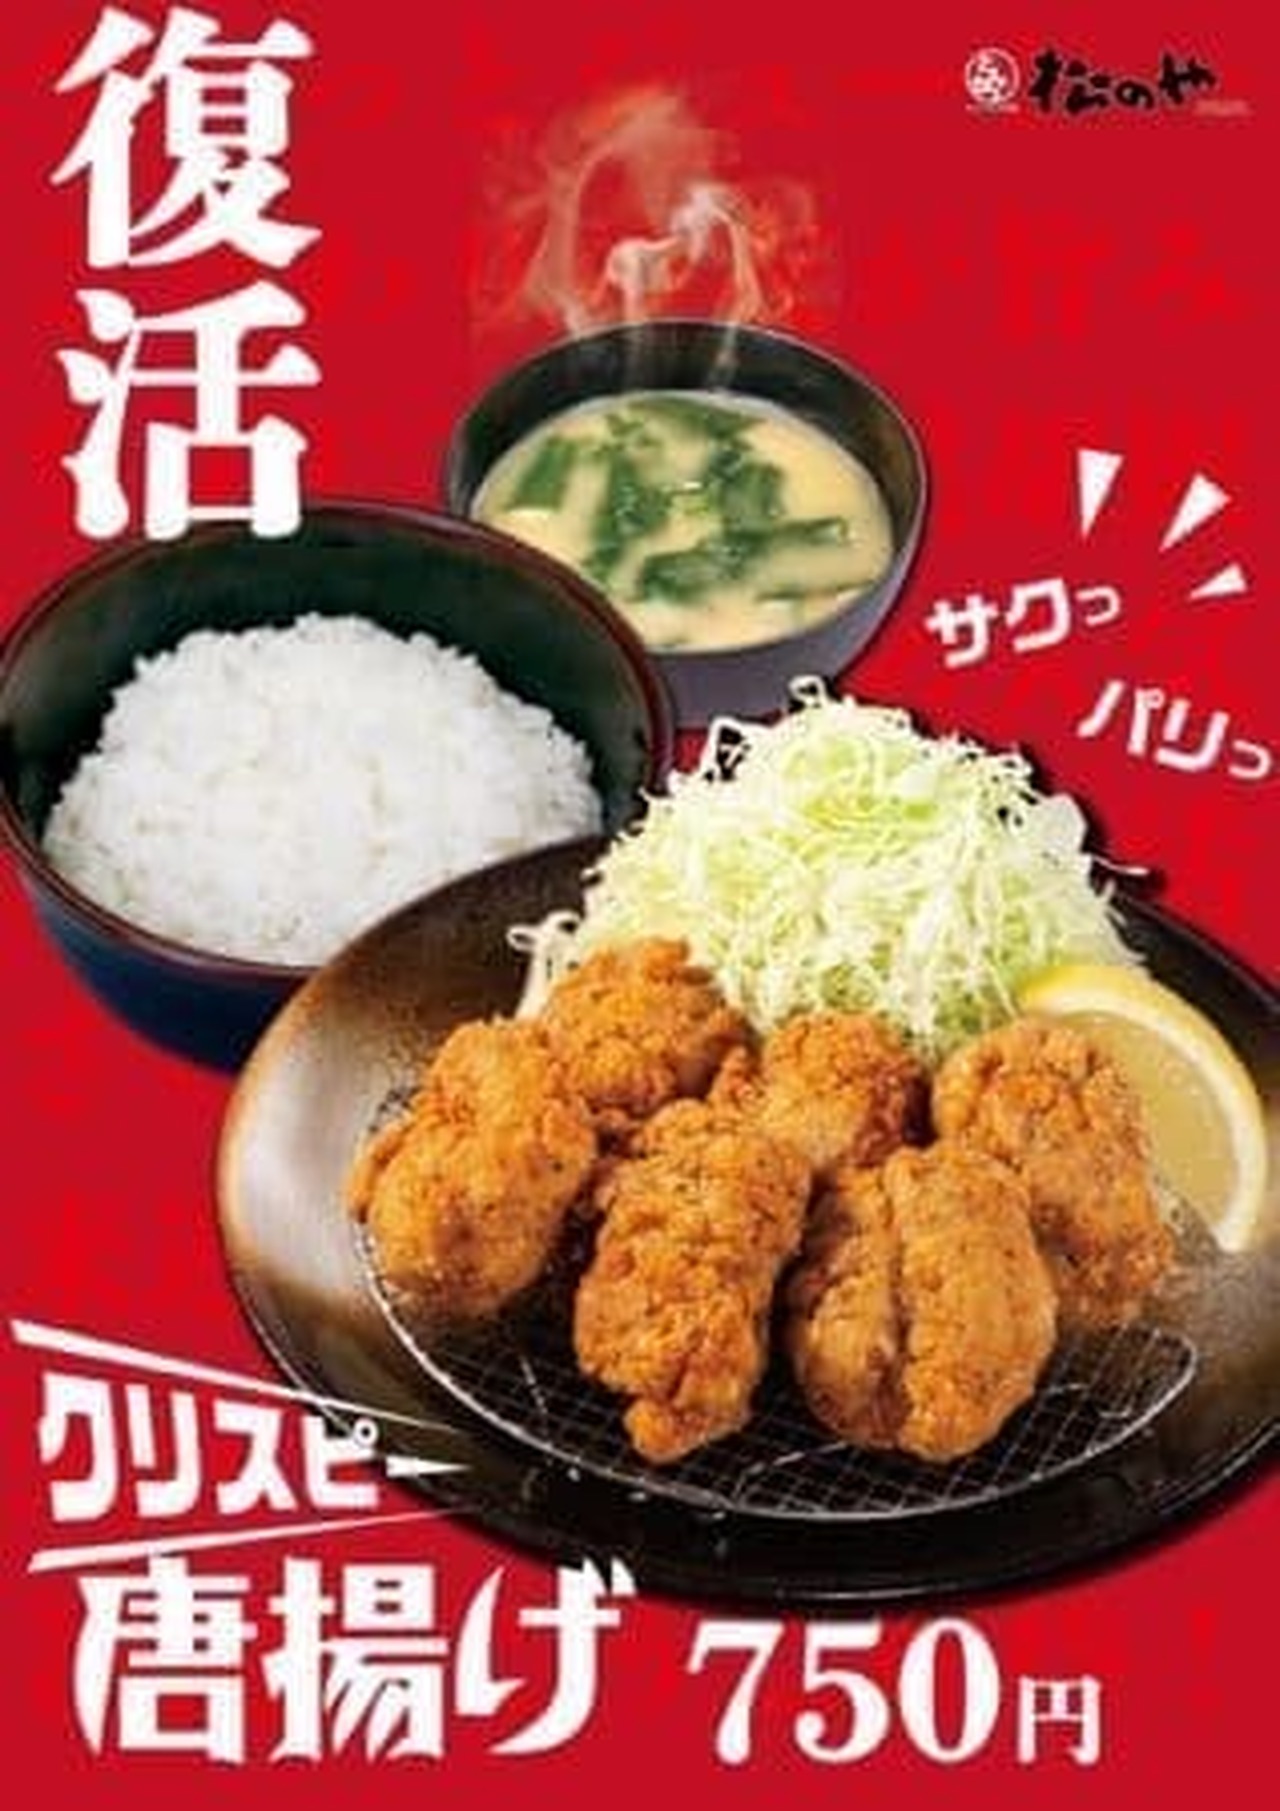 Matsunoya "Crispy fried chicken"